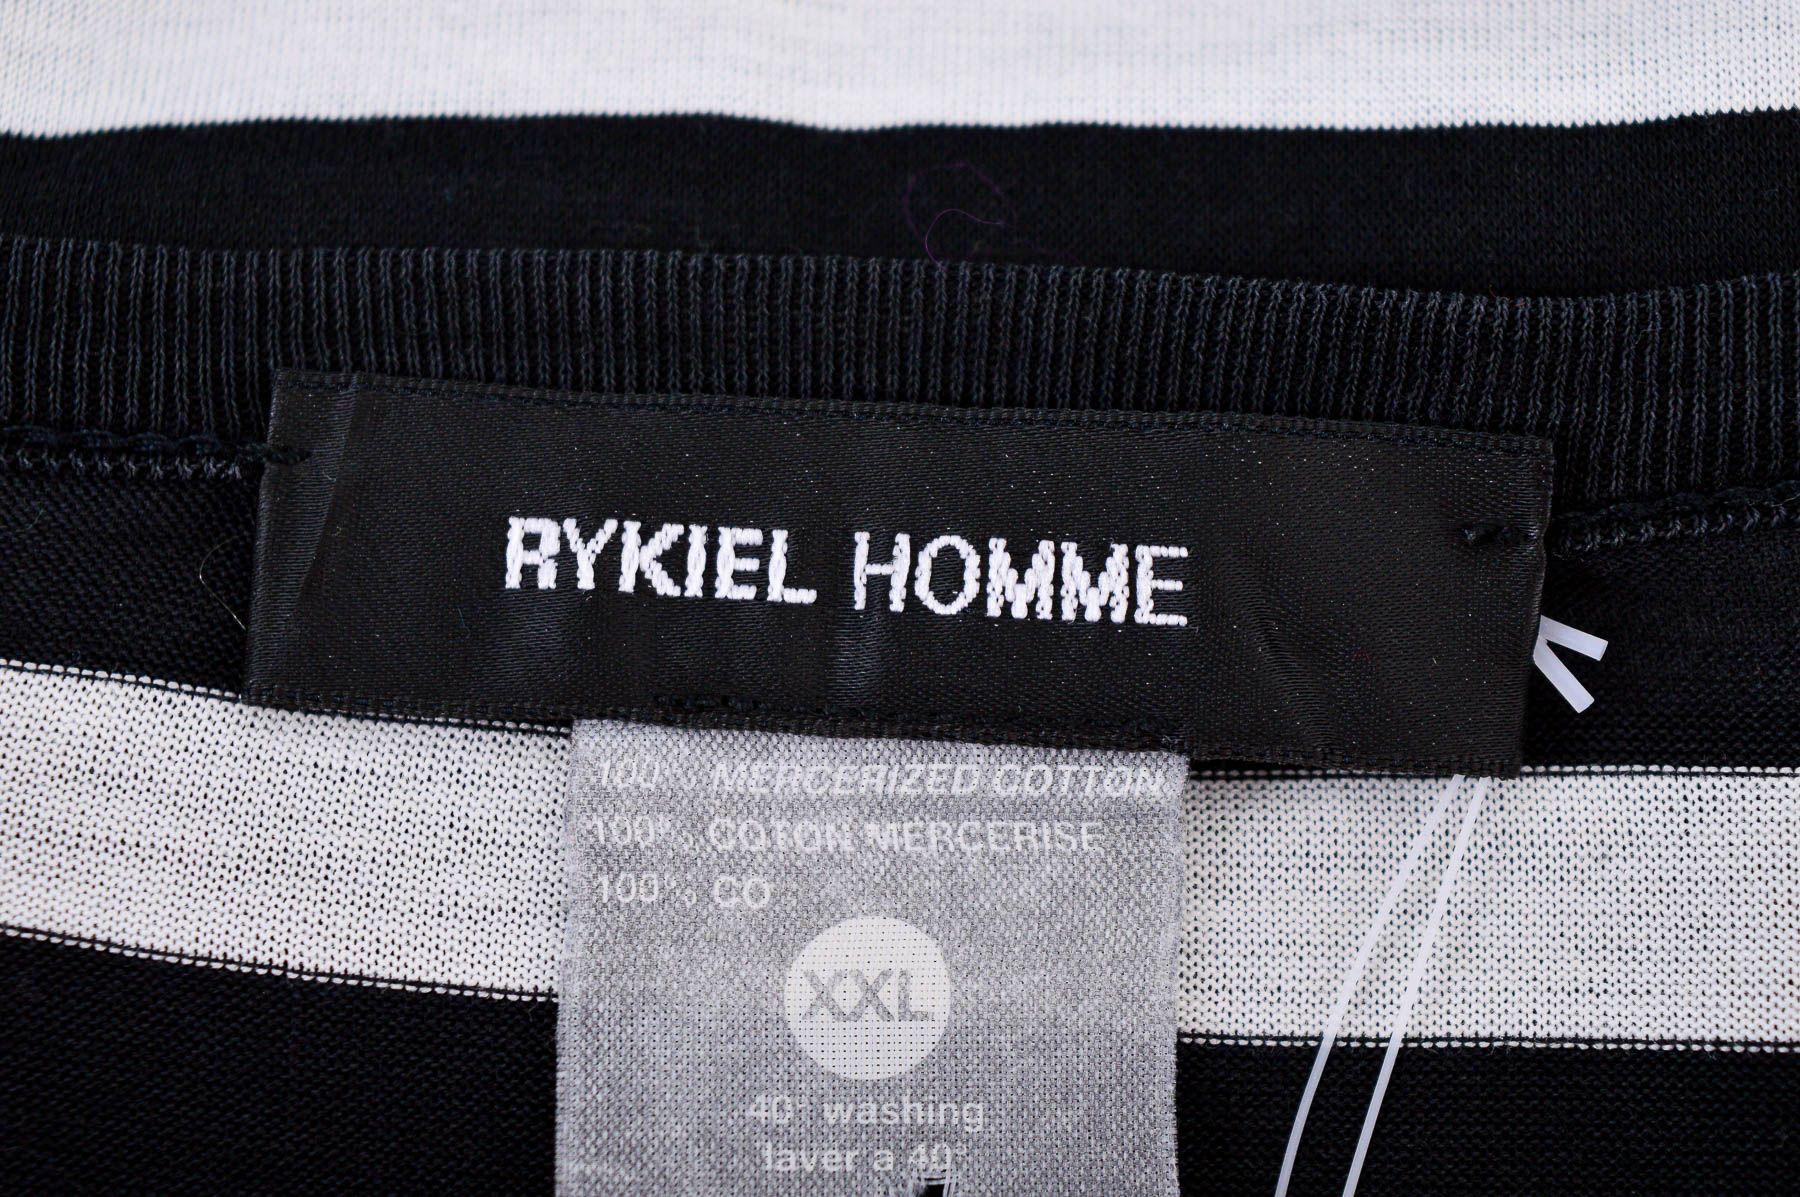 Men's blouse - Rykiel Homme - 2